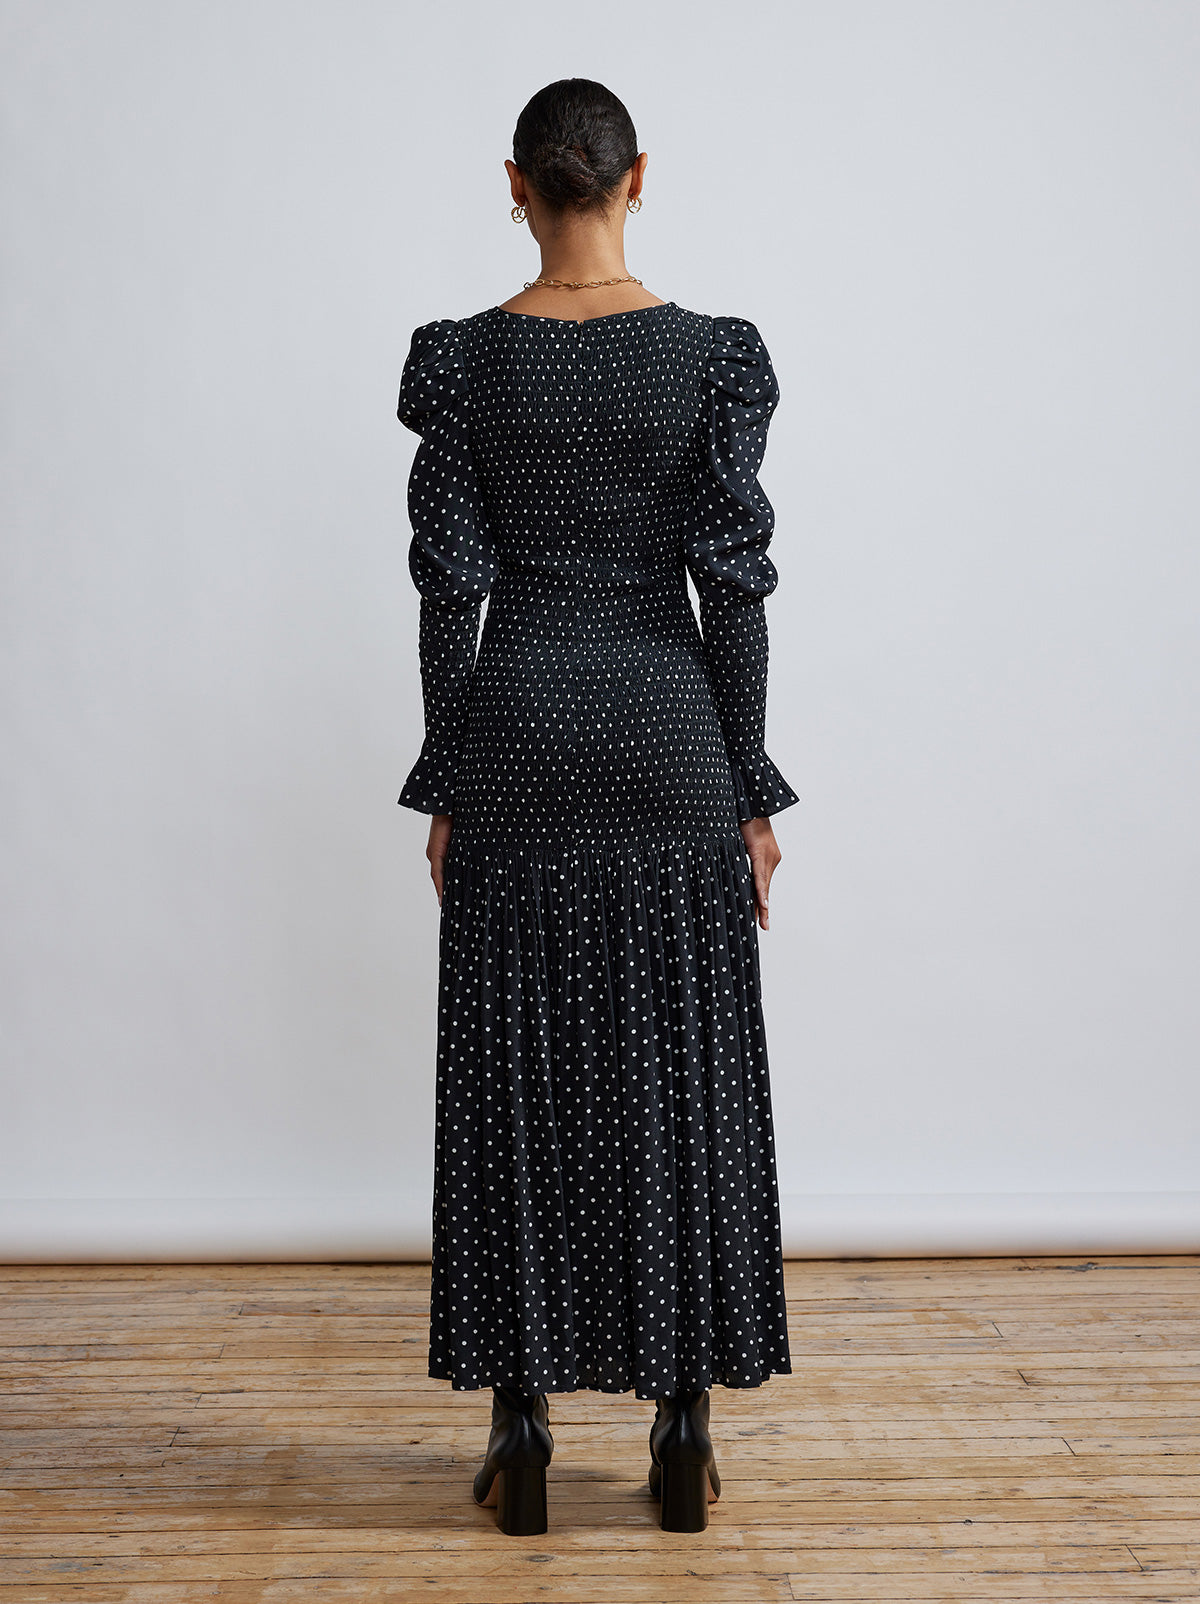 Wren Black Polka Dot Shirred Dress by KITRI Studio